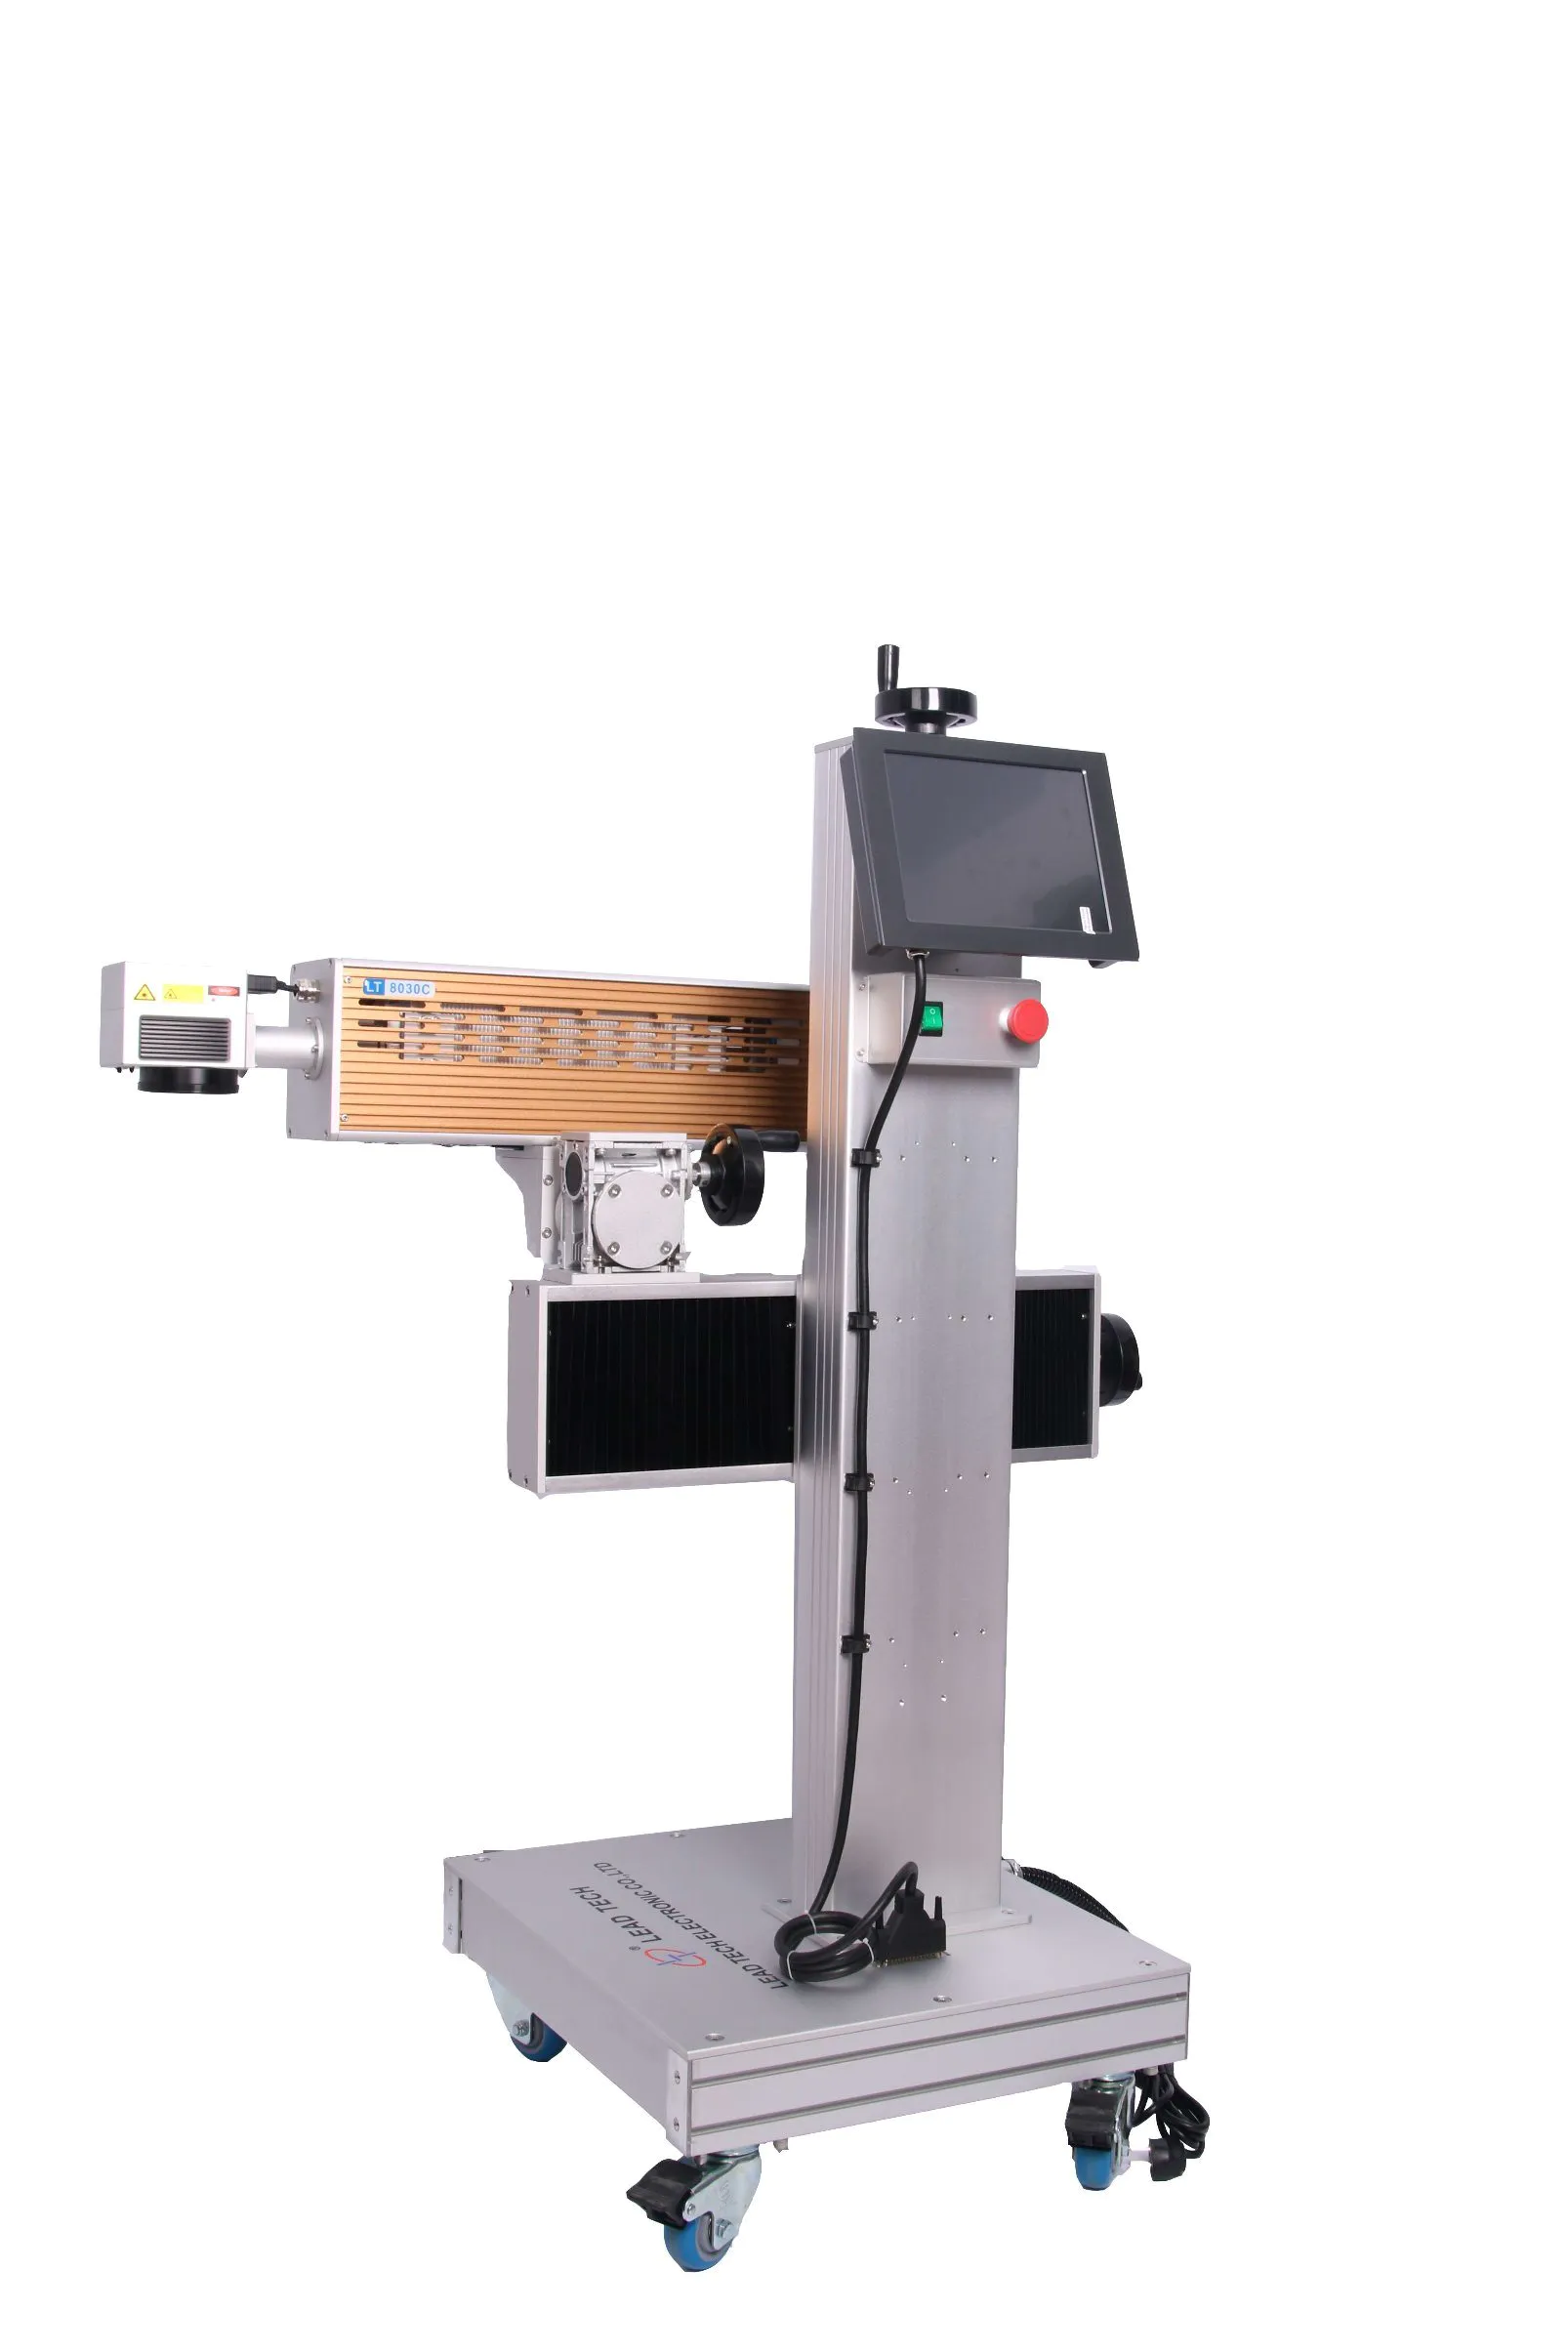 Lt8020c/Lt8030c CO2 20W/30W High Performance Digital Laser Marking Printer for Plate Silver Gold Printing